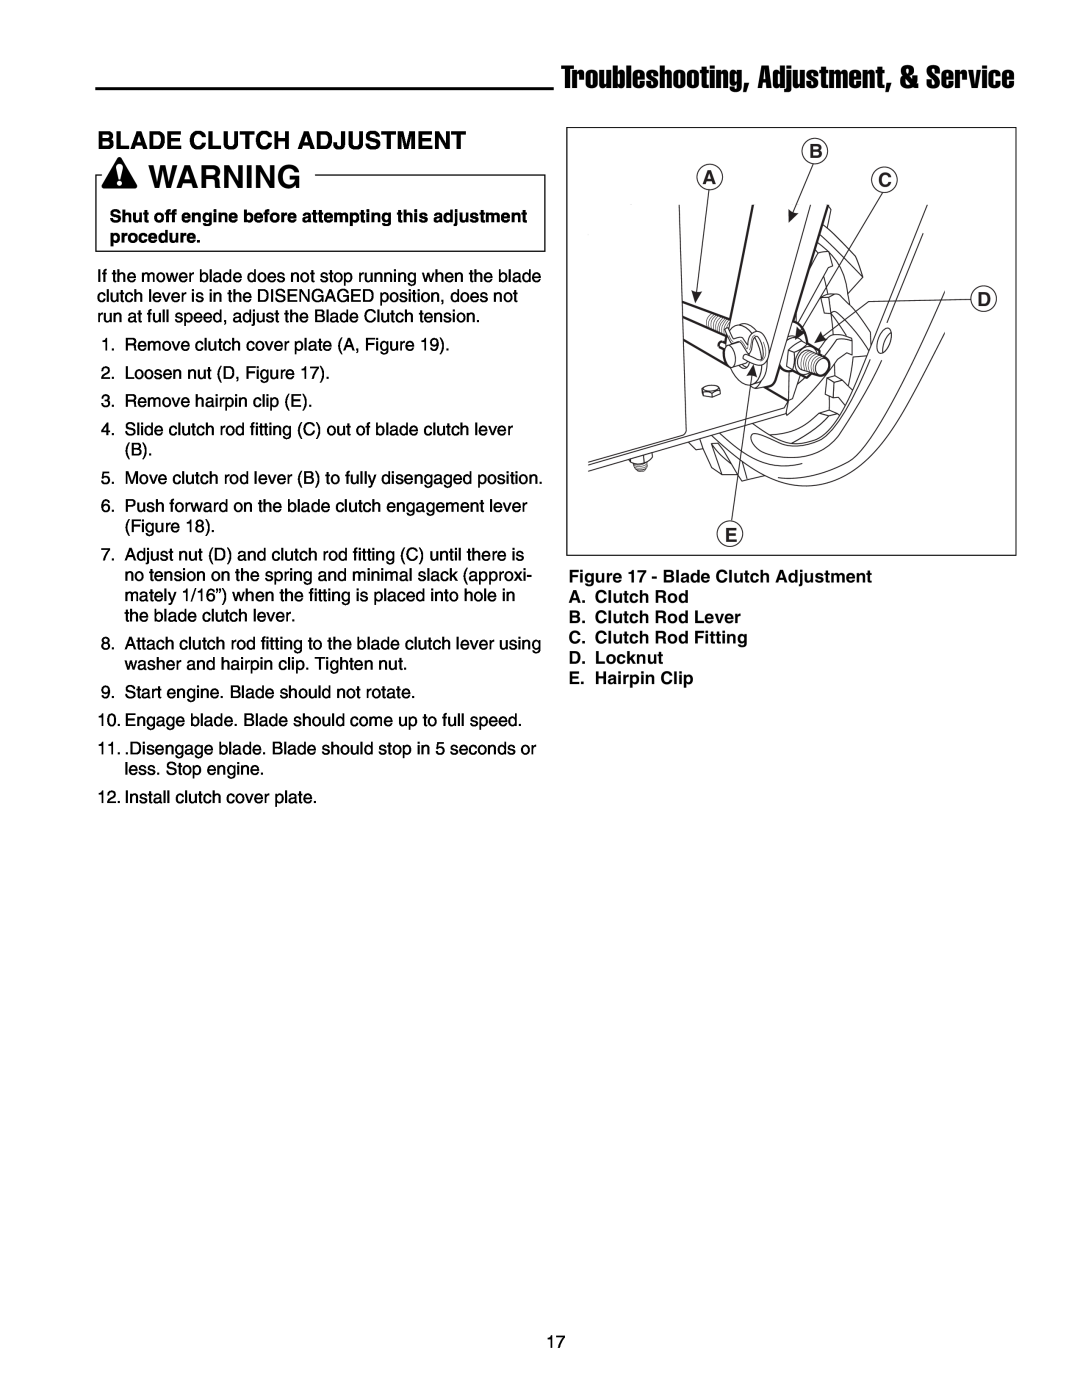 Briggs & Stratton FB13250BS manual Troubleshooting, Adjustment, & Service, Blade Clutch Adjustment 